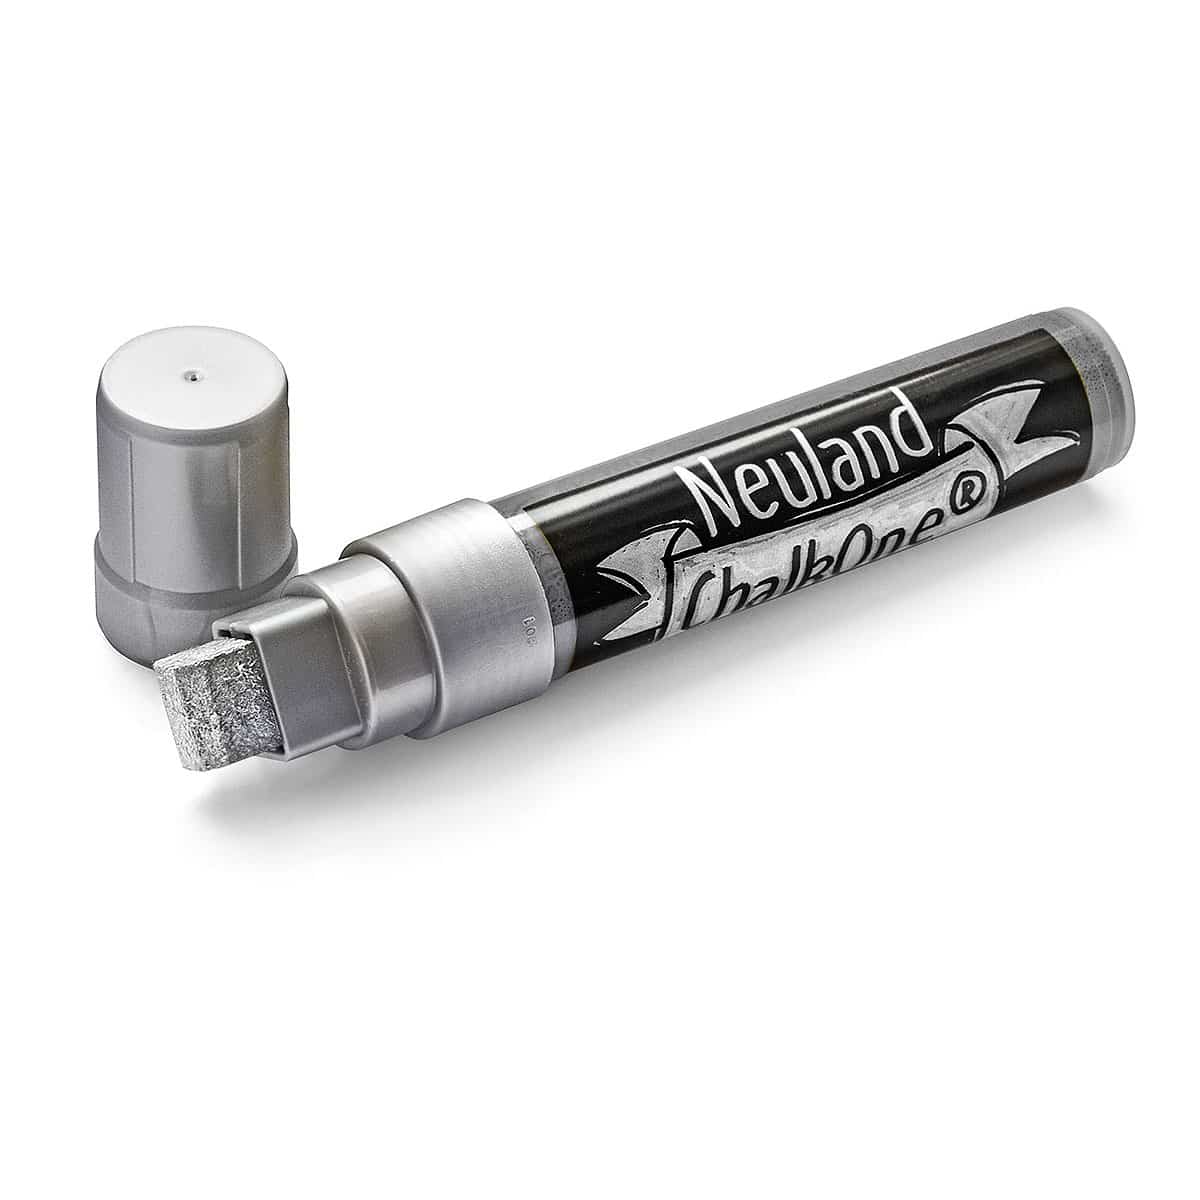 Neuland ChalkOne®, wedge nib 5-15 mm – single colors- c551 silber